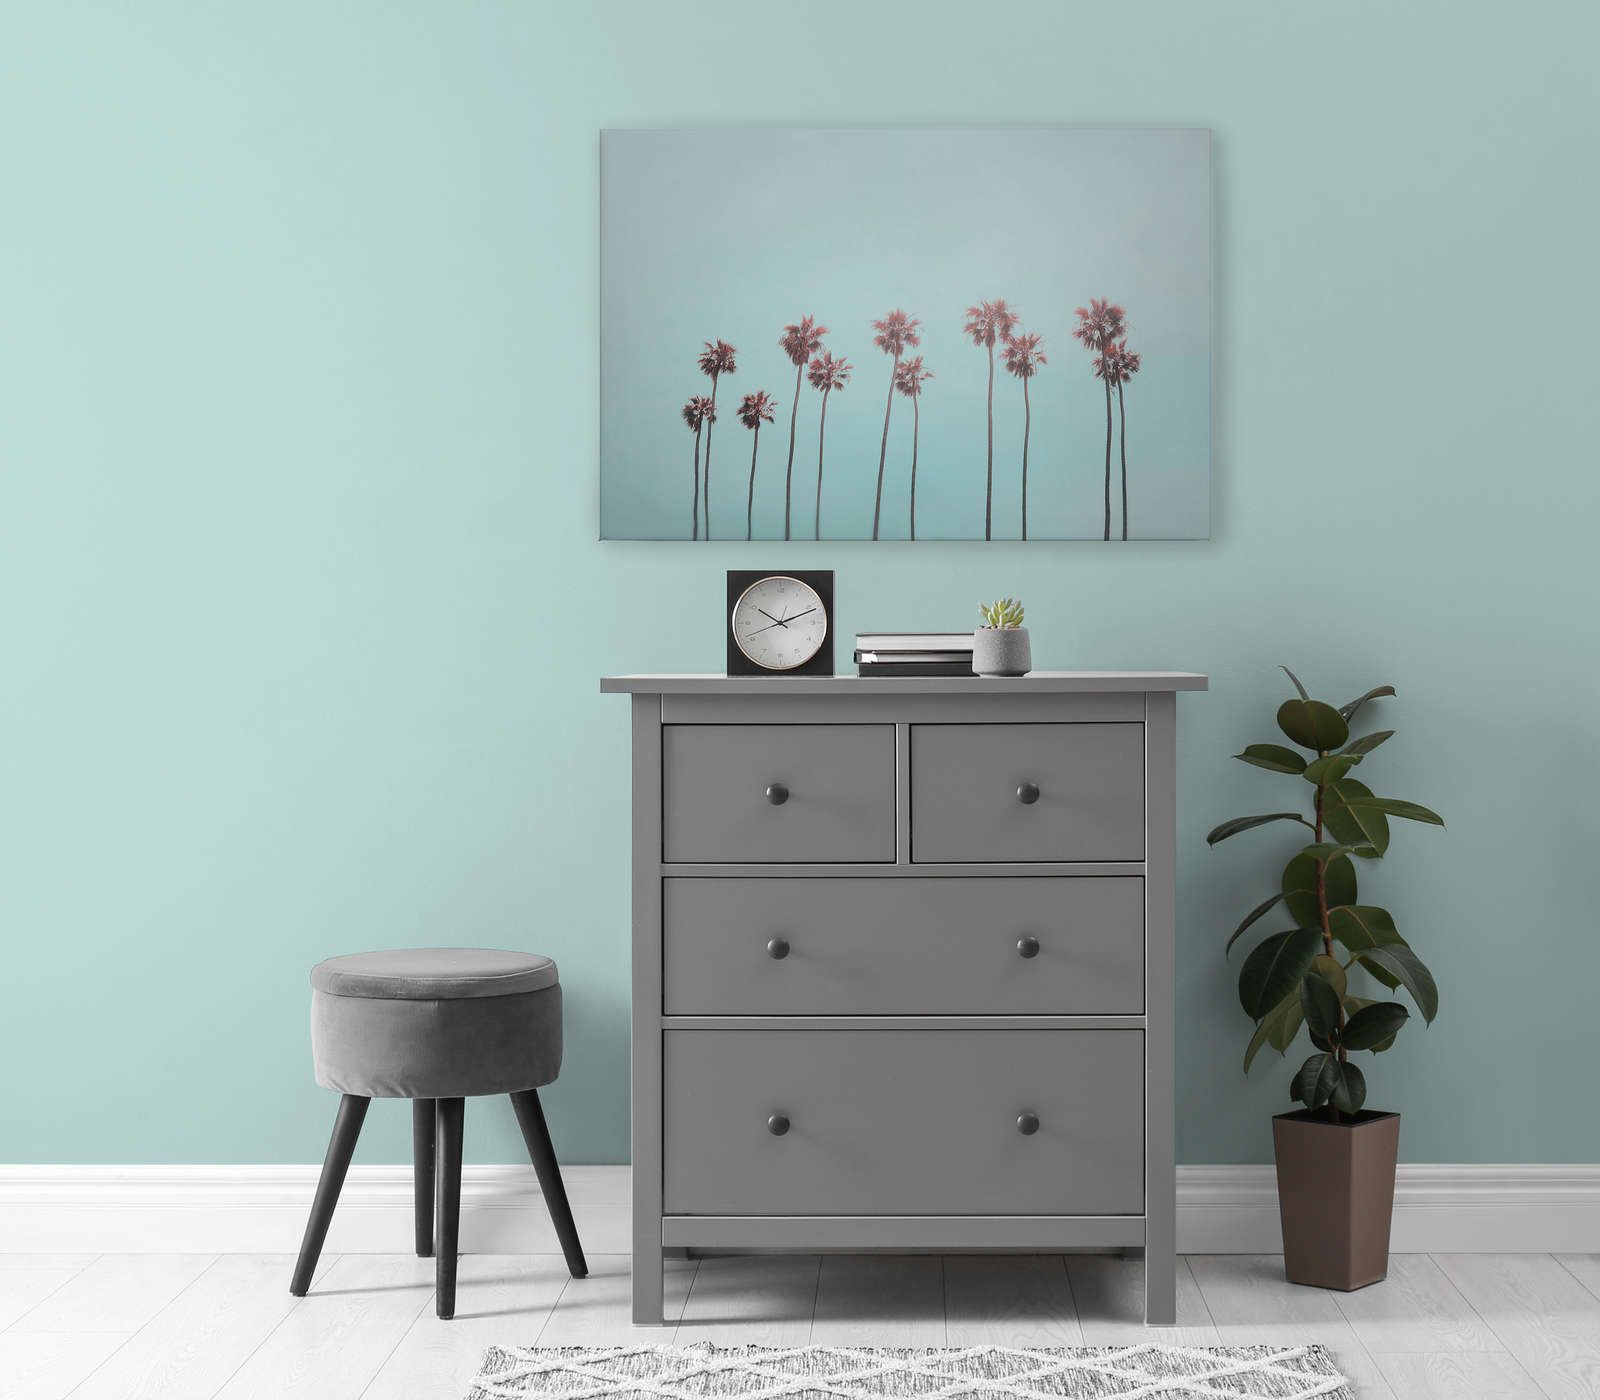             Canvas schilderij Palmbomen & Lucht voor Strandgevoel in Turquoise & Roze - 0,90 m x 0,60 m
        